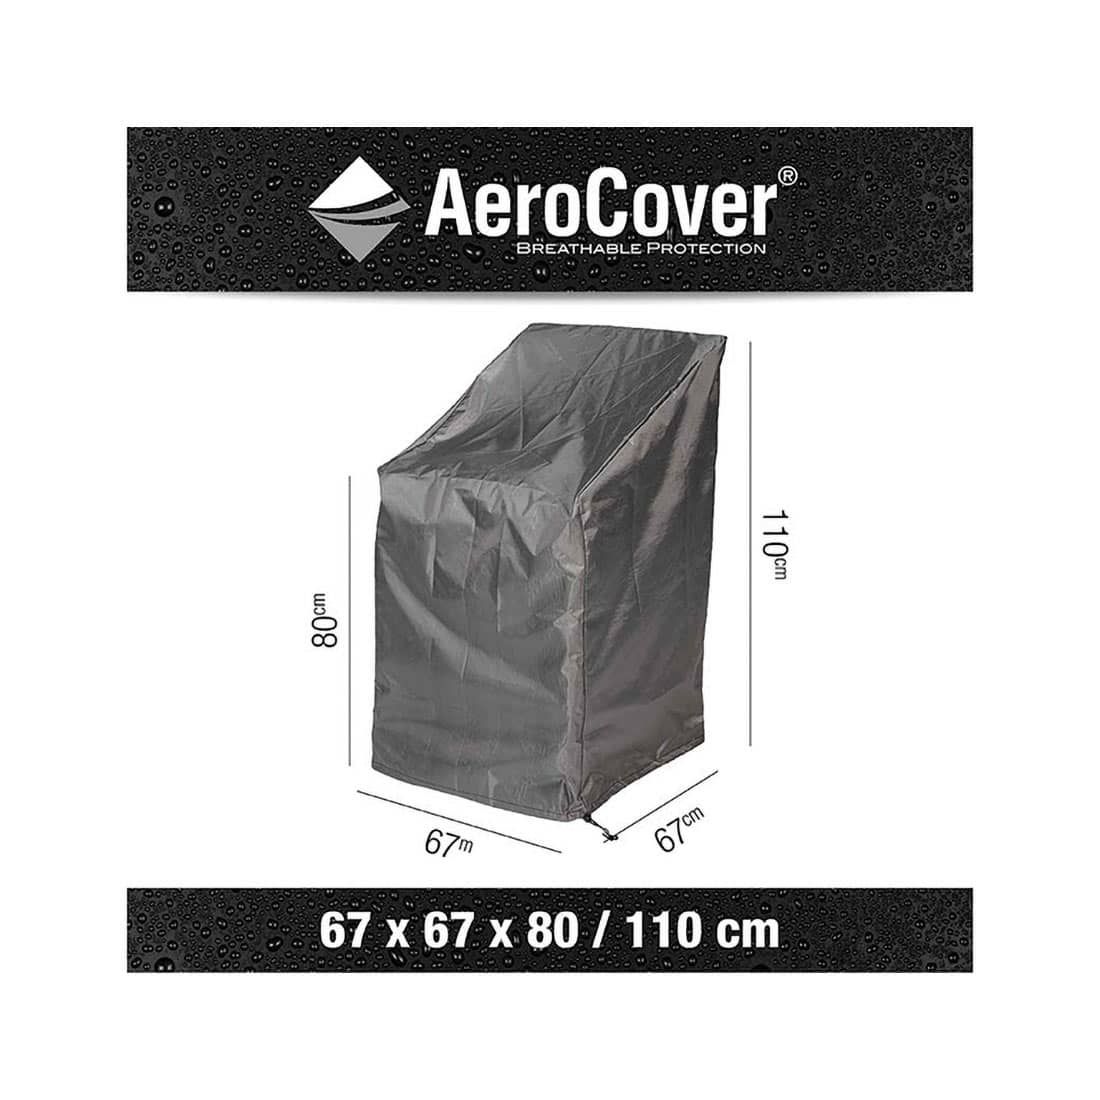 AeroCover Schutzhülle für Stapelsessel/Klappsessel 67x67x80/110cm Polyester